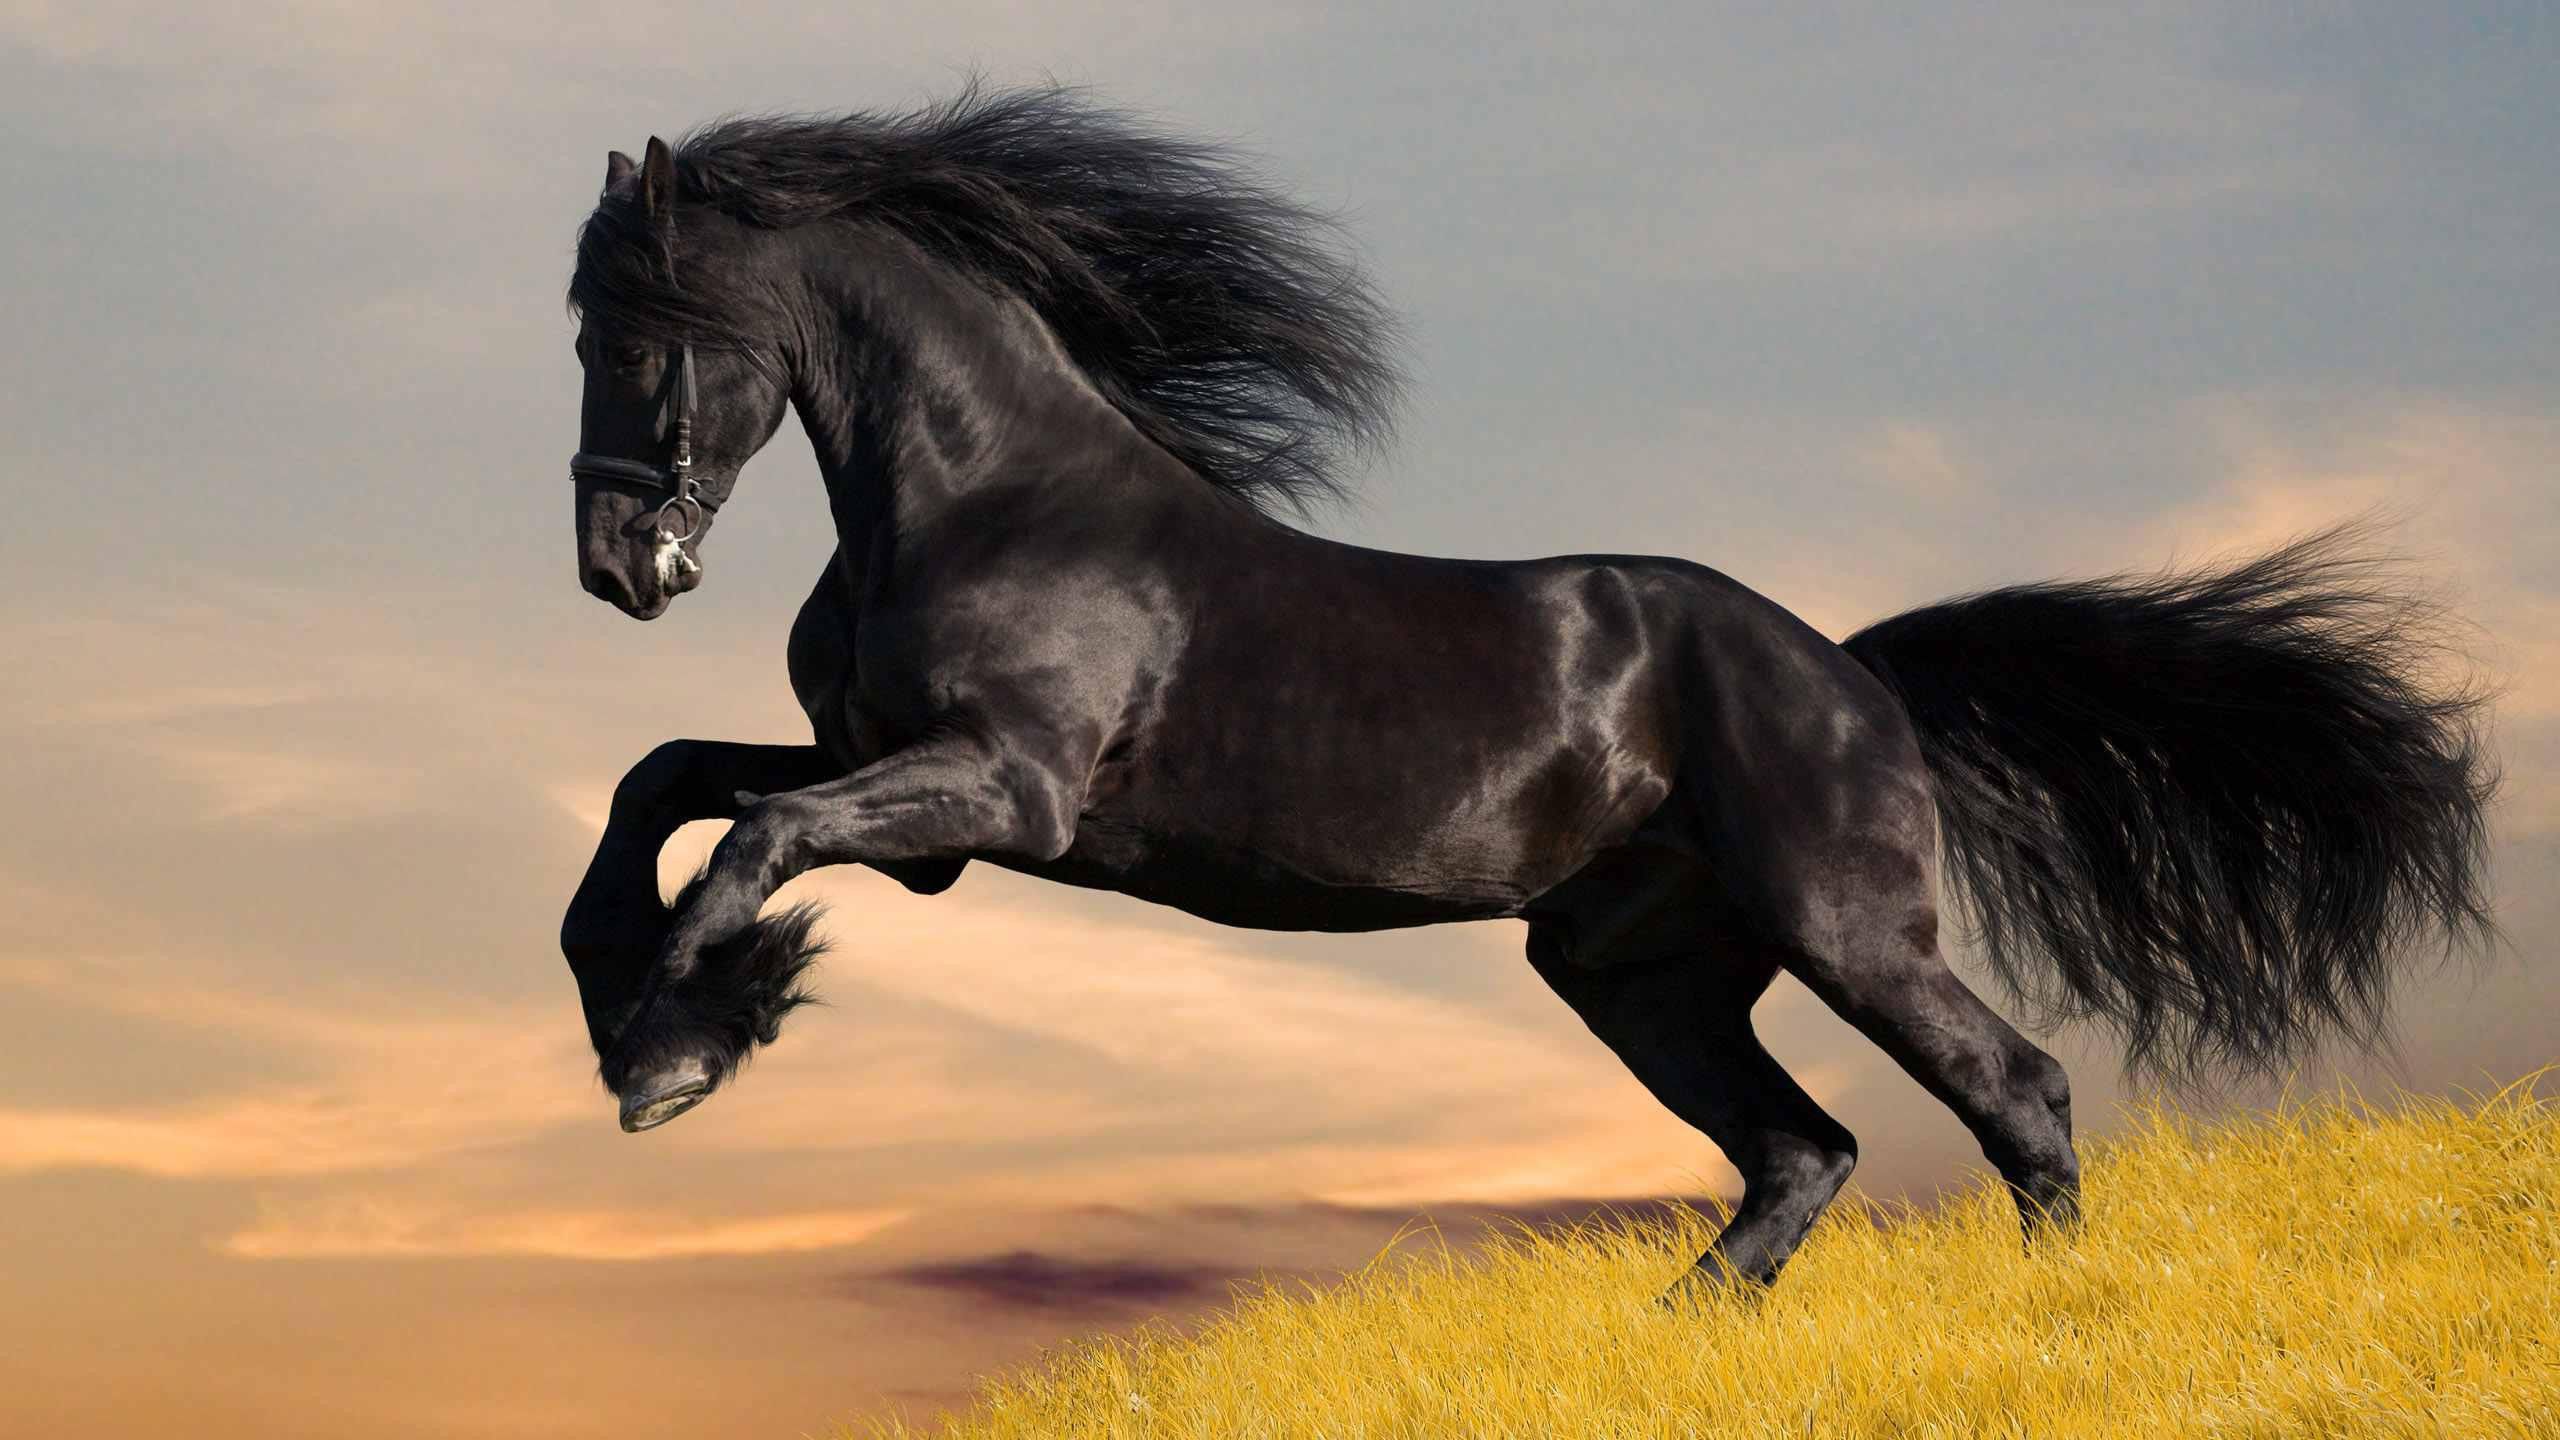 500+ Black Horse Pictures [HD] | Download Free Images on Unsplash